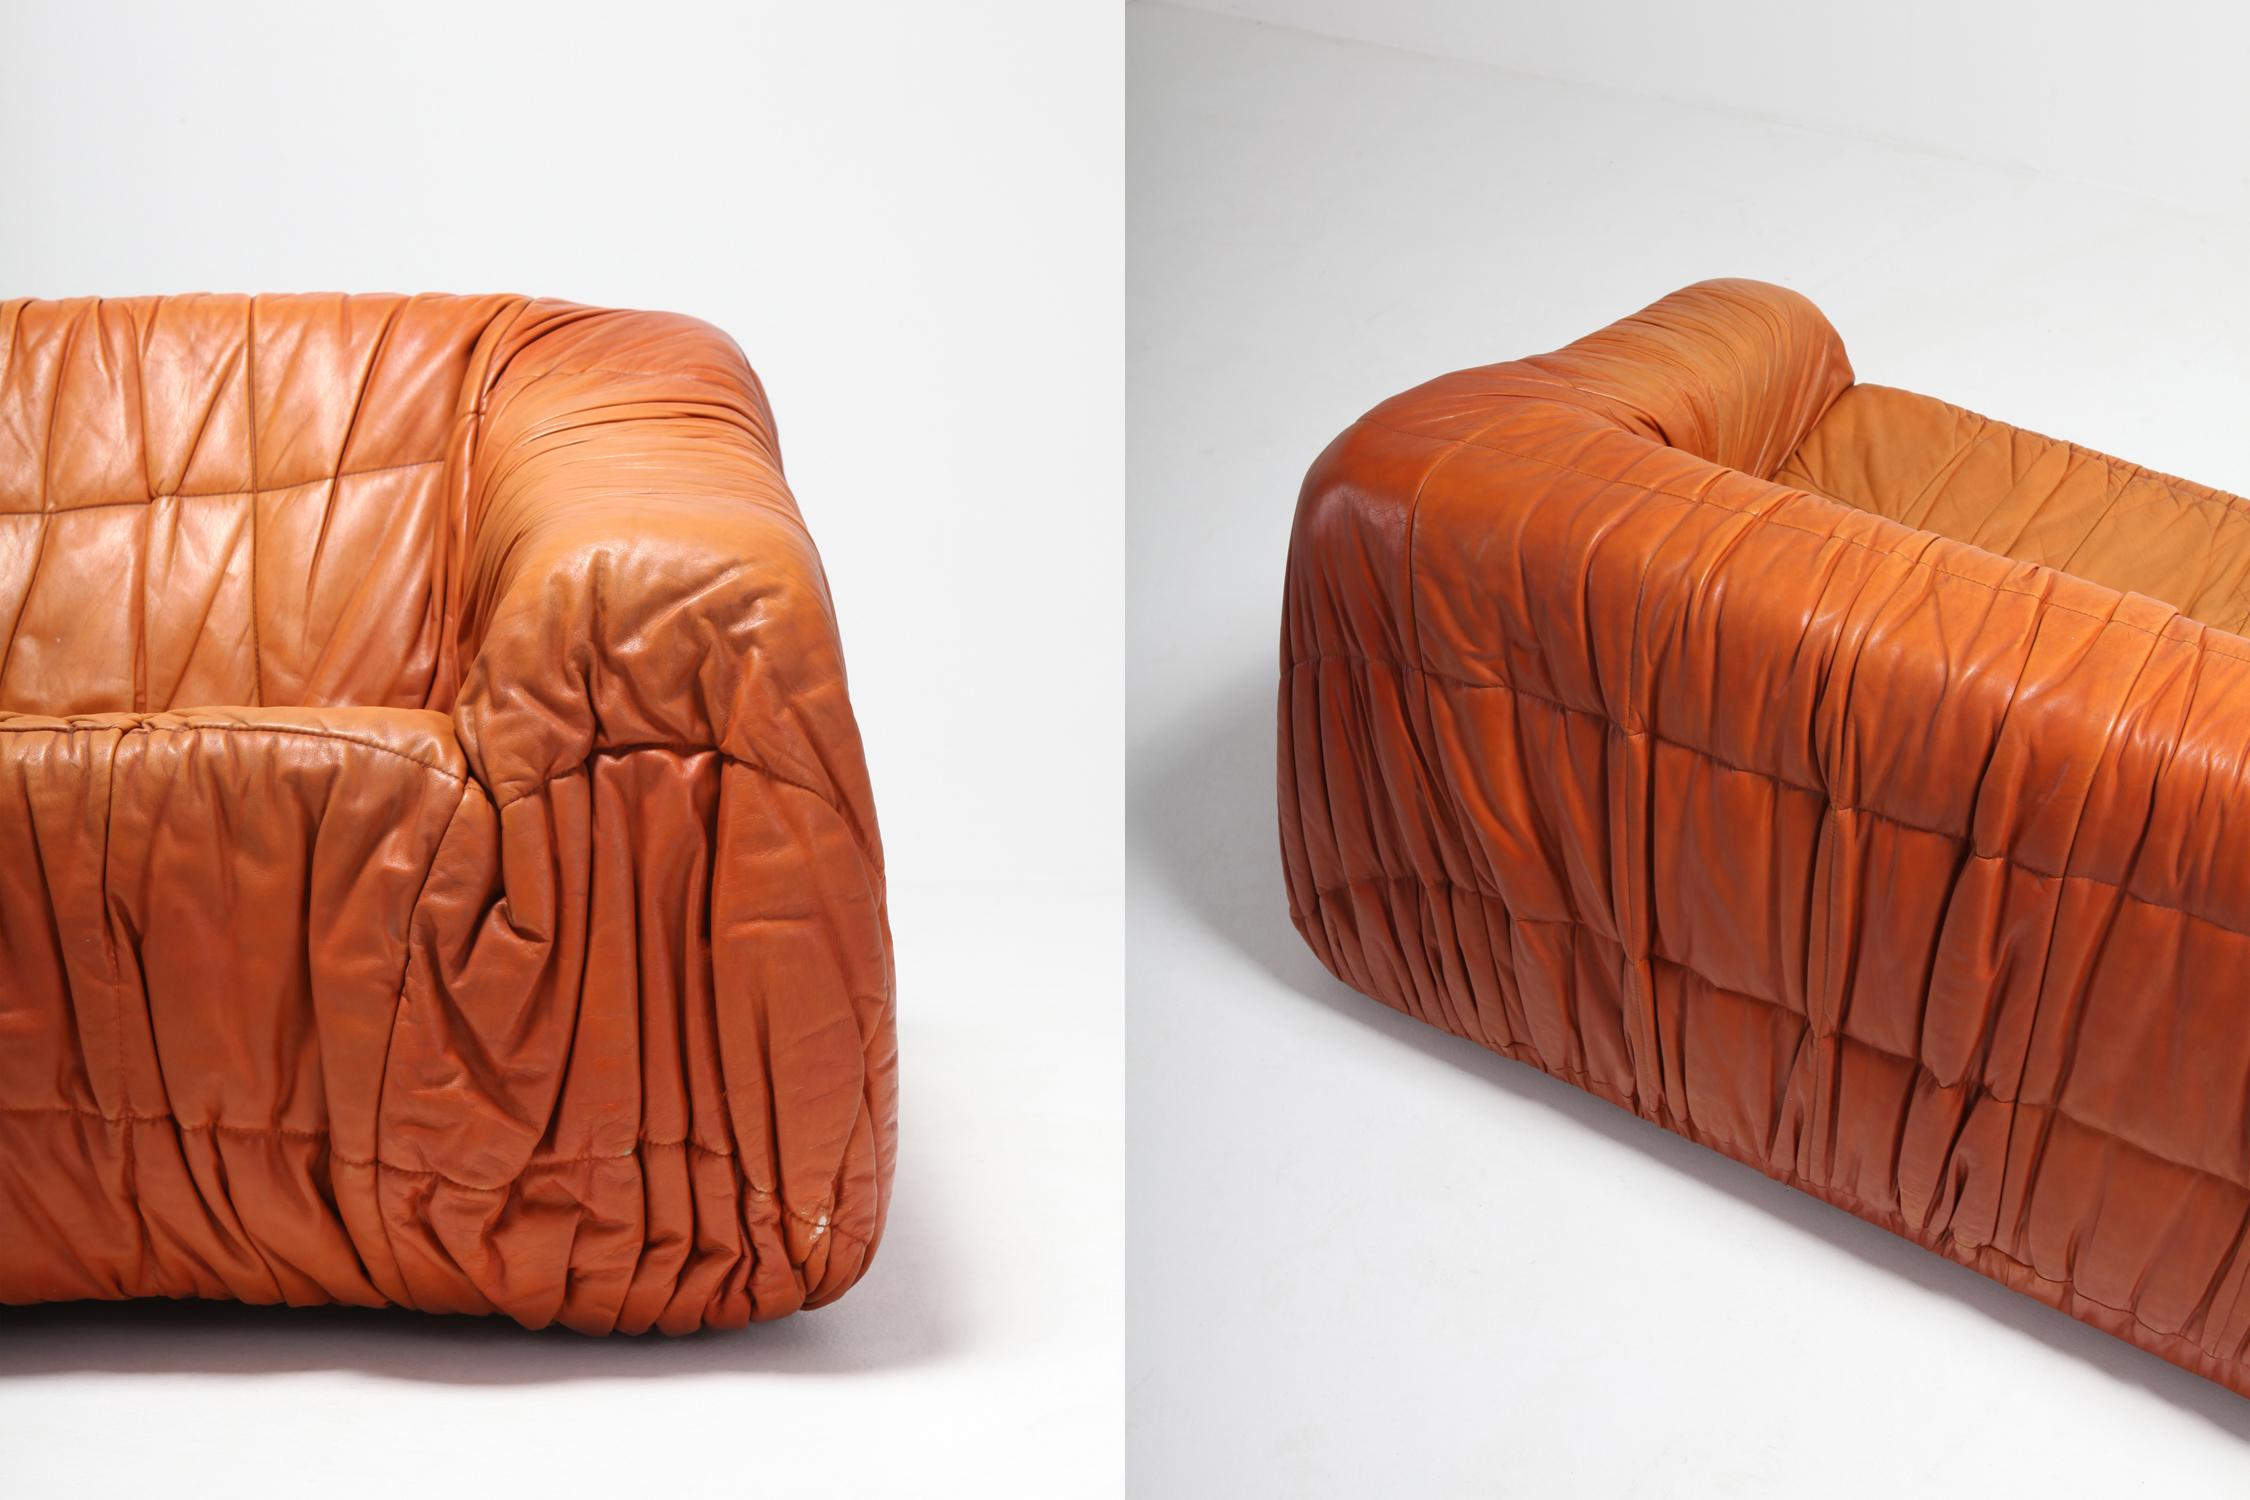 Leather Cognac ‘Piumino’ Living Room Set by De Pas, D’urbino & Lomazzi